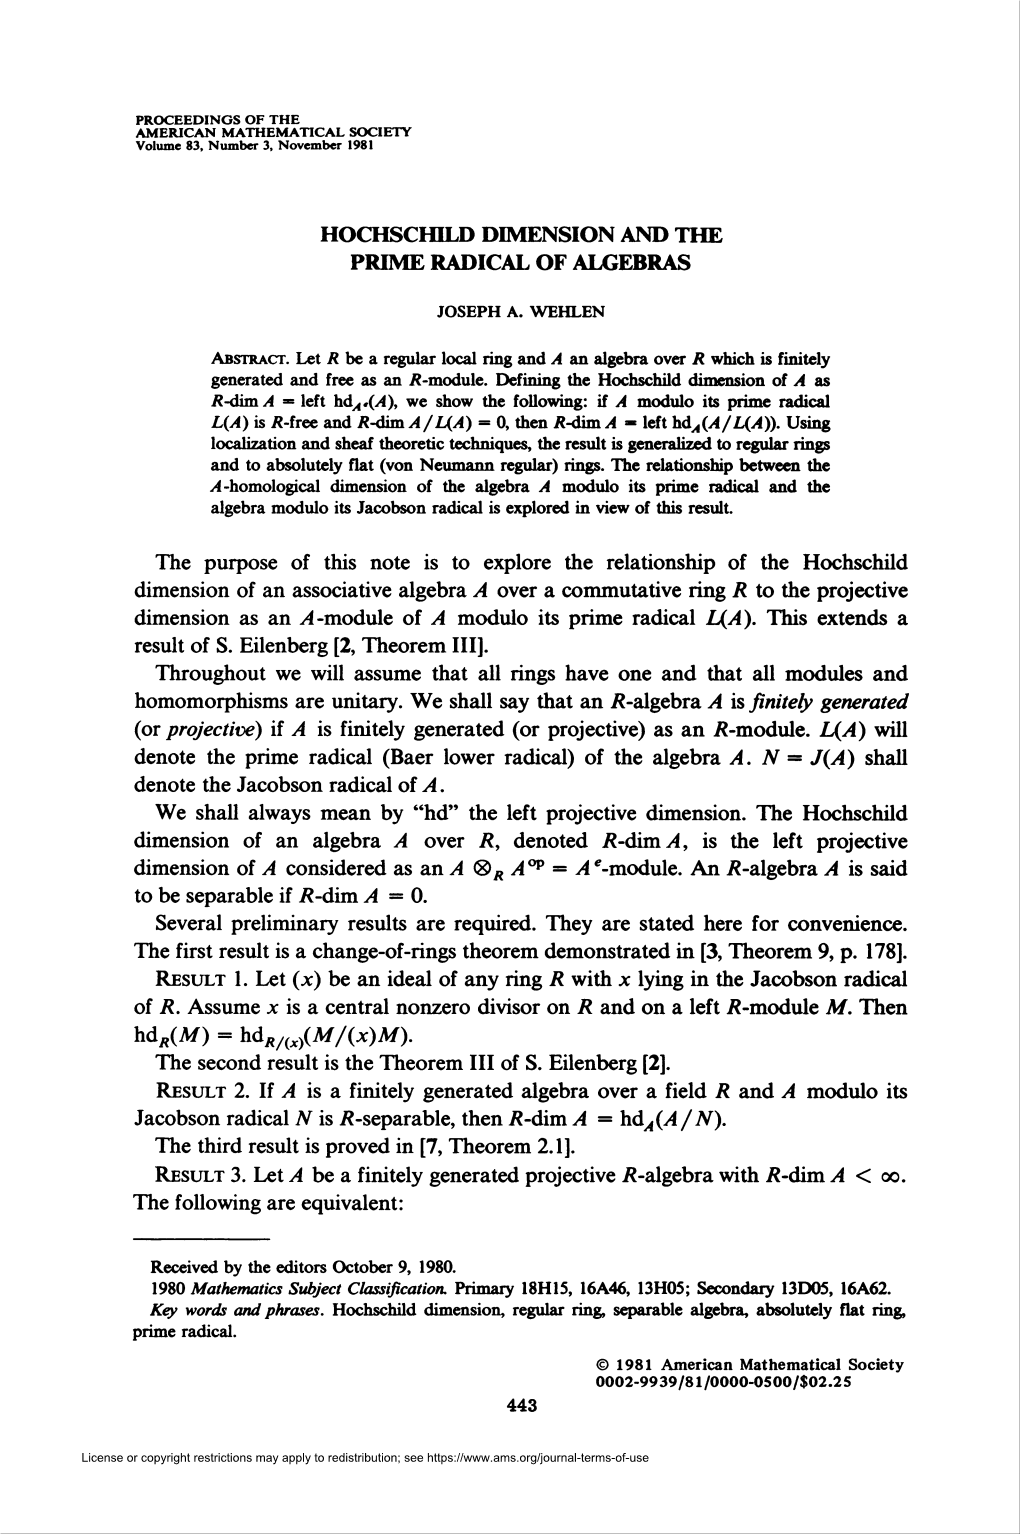 Hochschild Dimension and the Prime Radical of Algebras